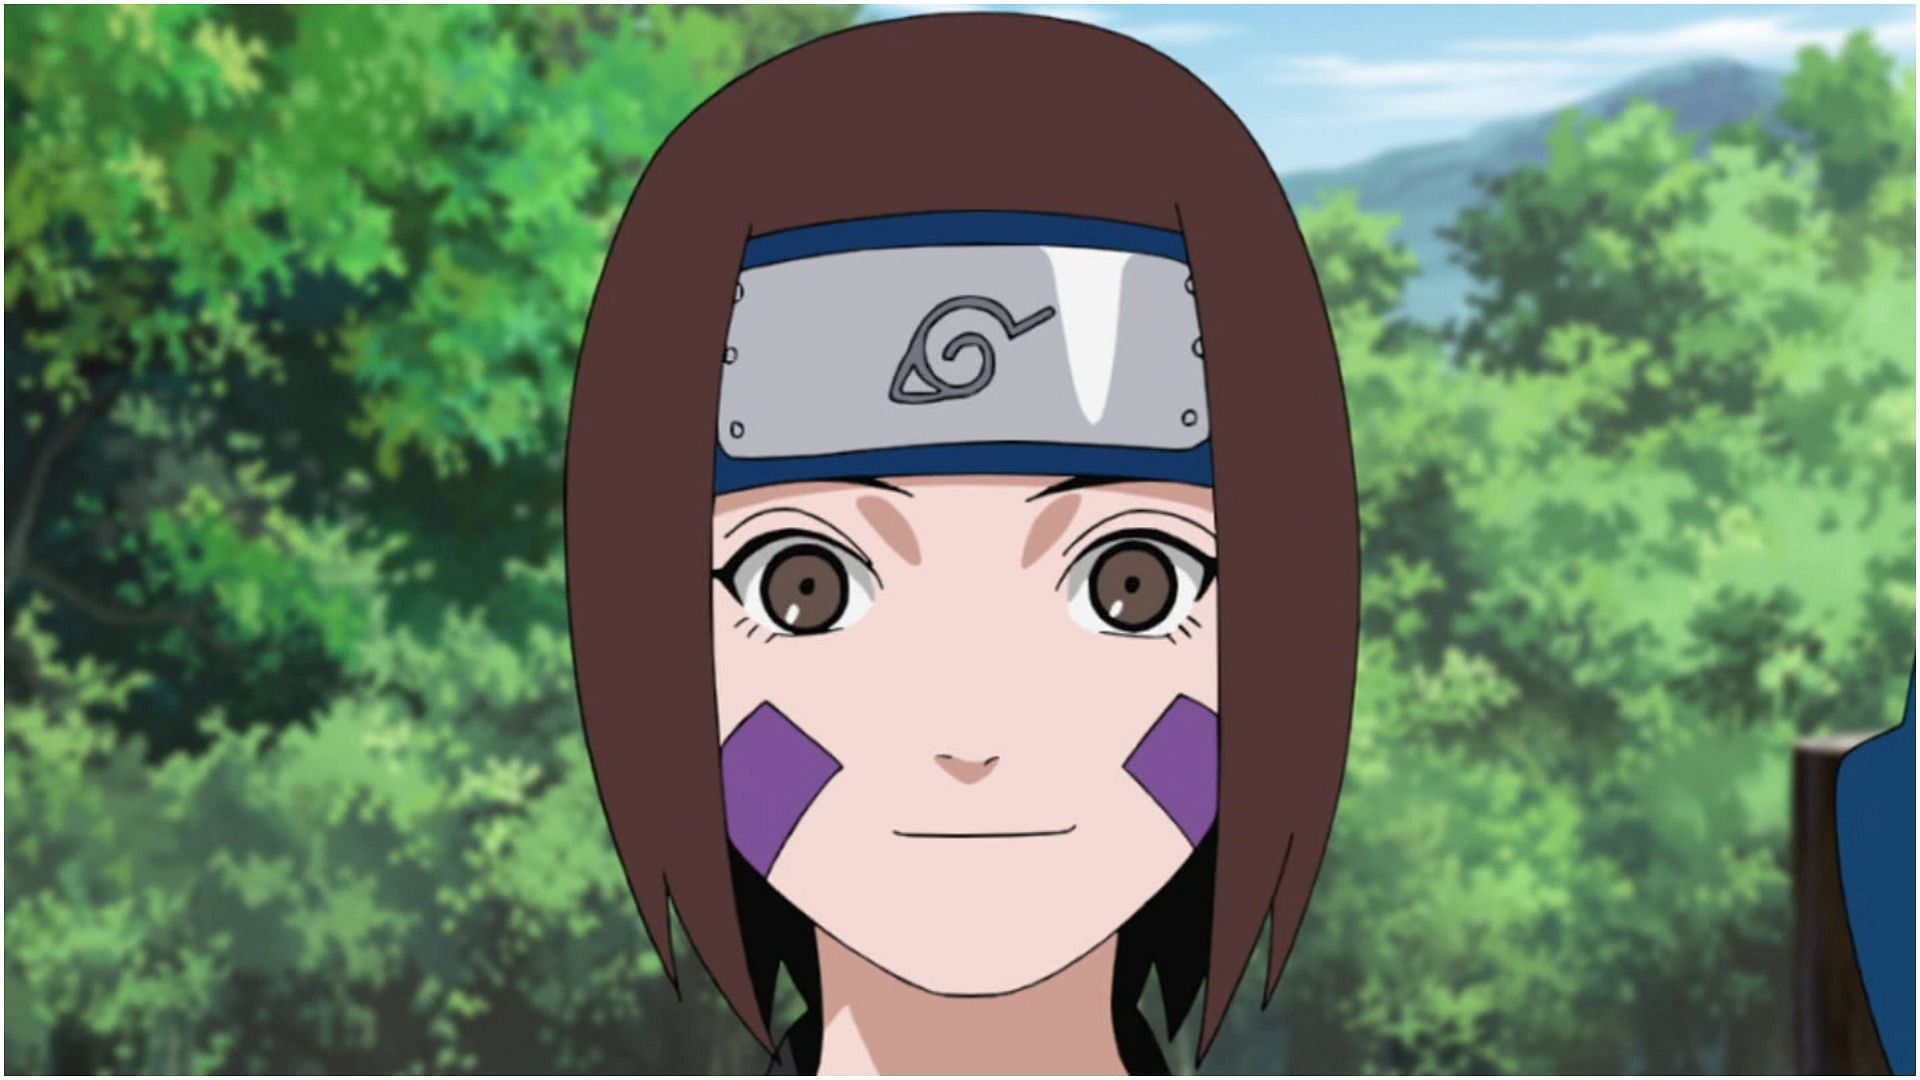 Rin Nohara as seen in Naruto (Image via Studio Pierrot)